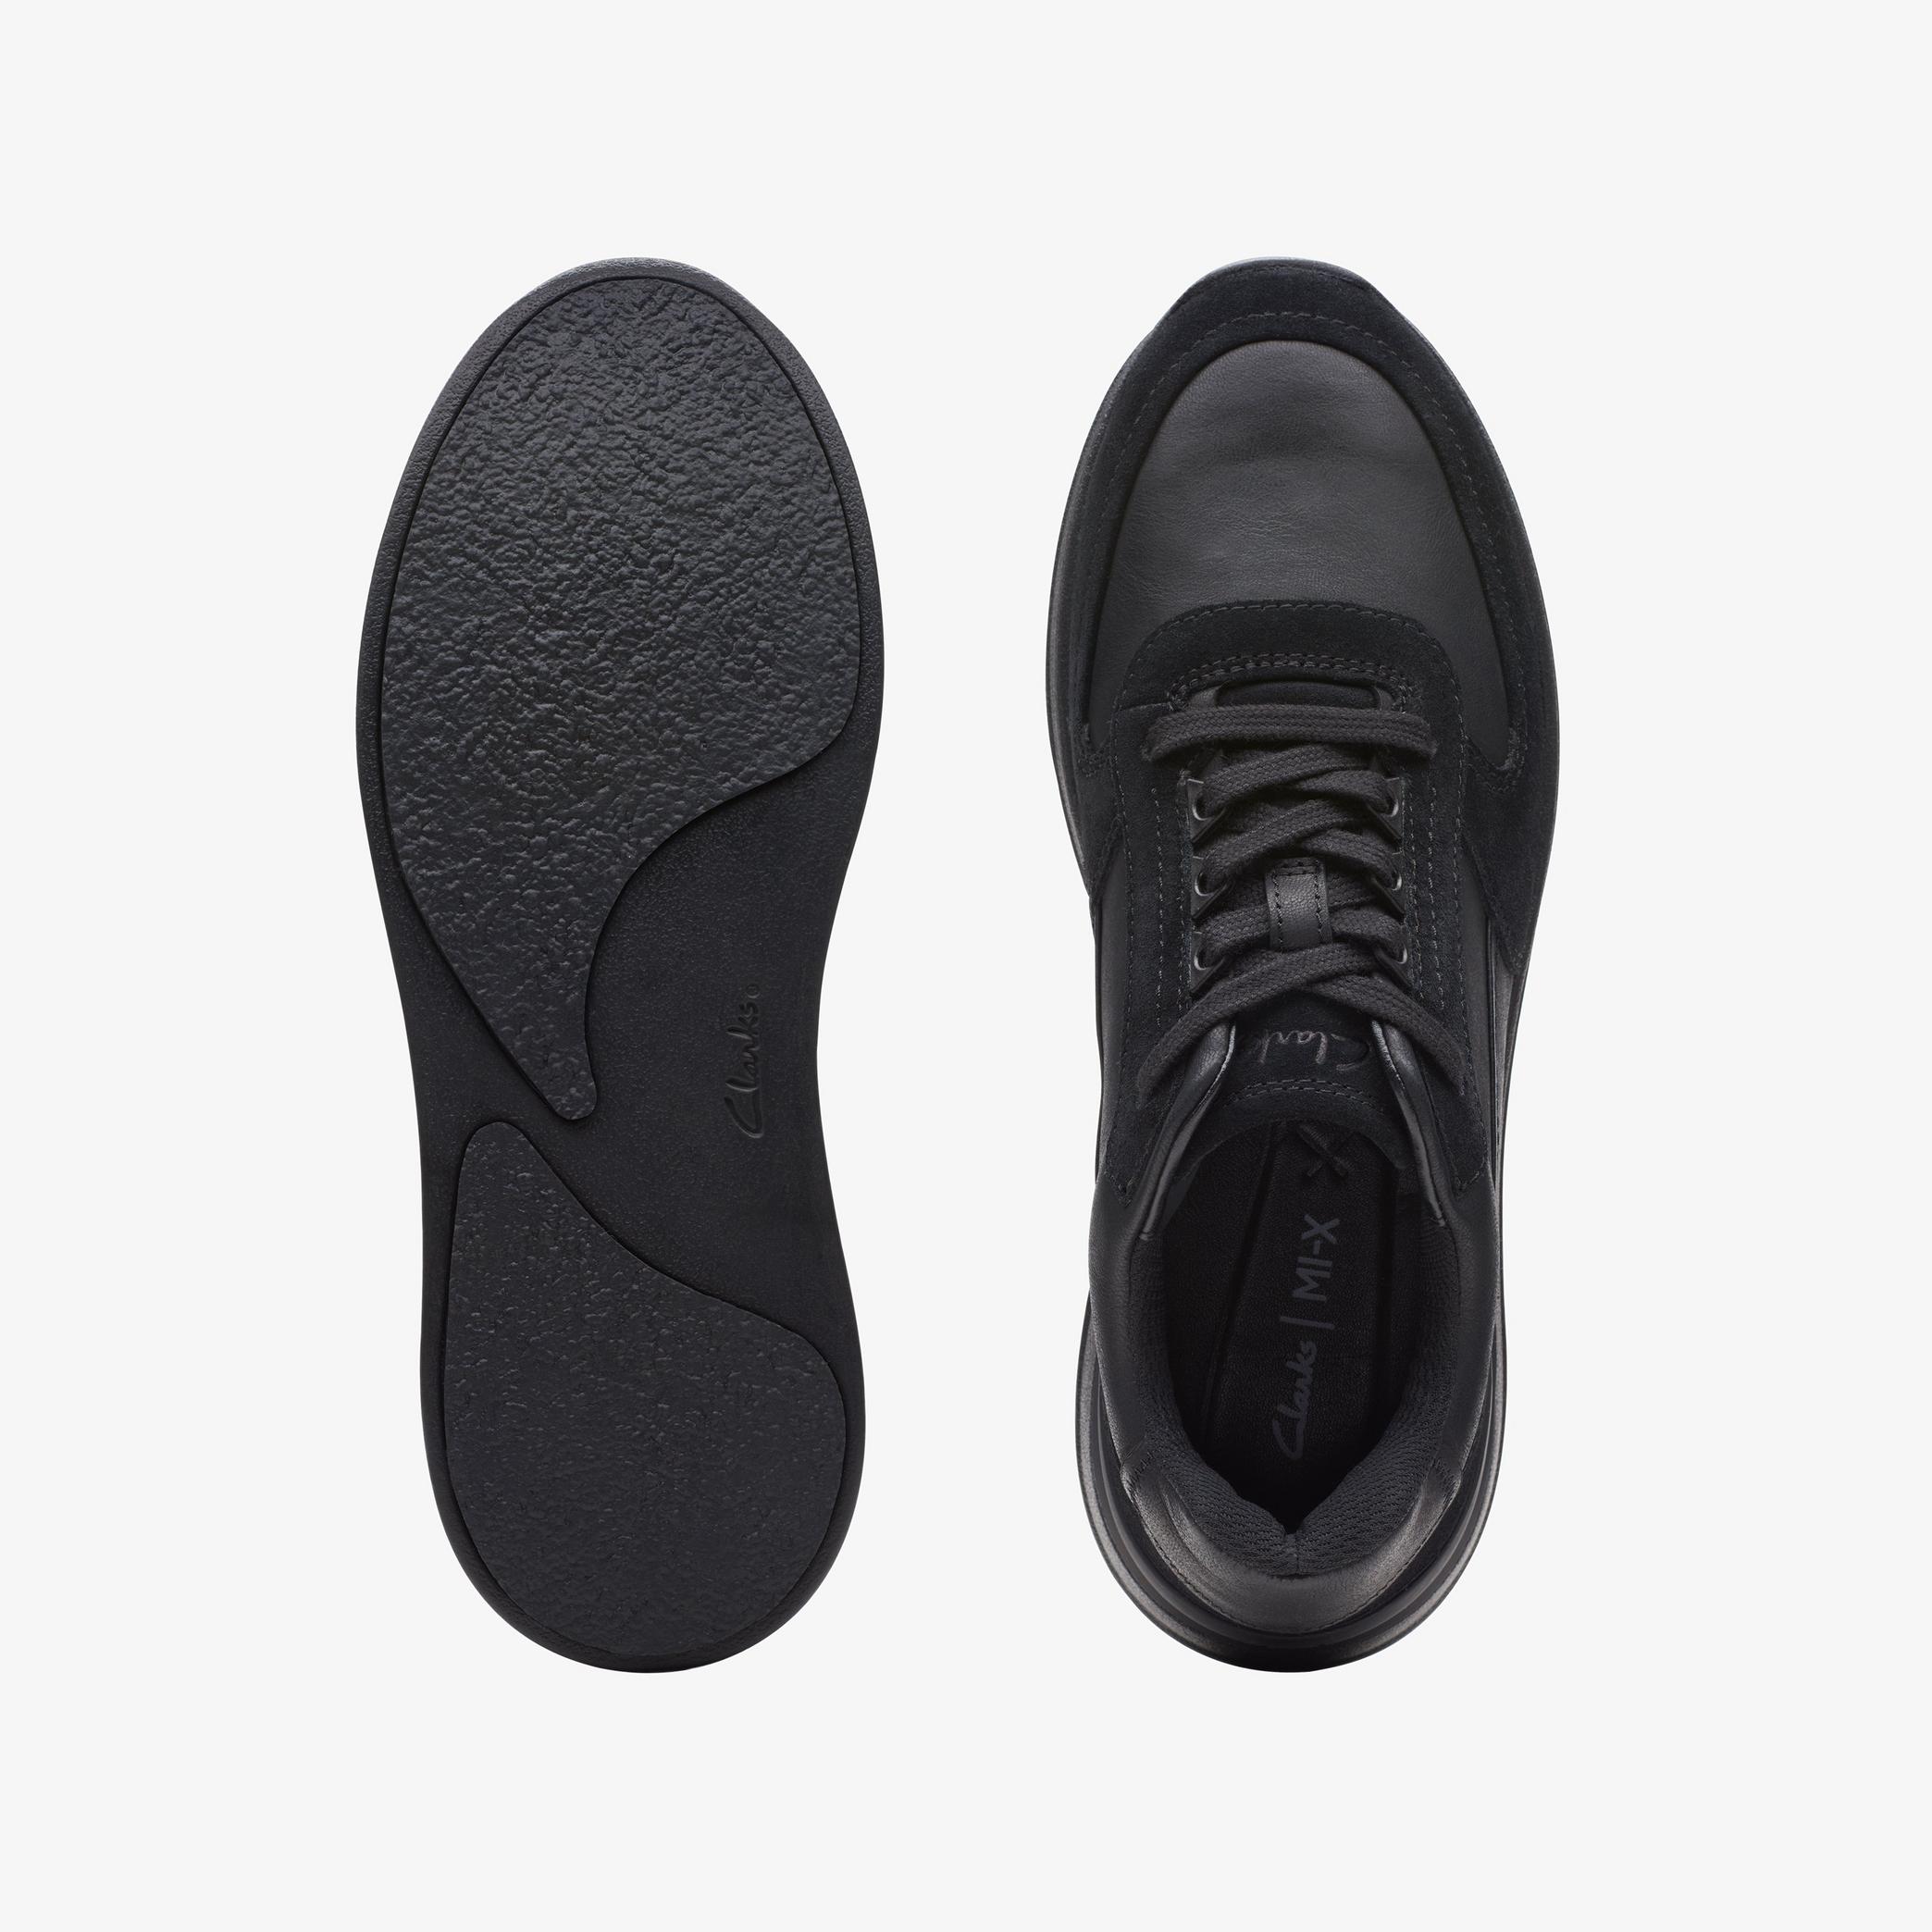 Mens RaceLite Move Black/Black Shoes | Clarks Outlet